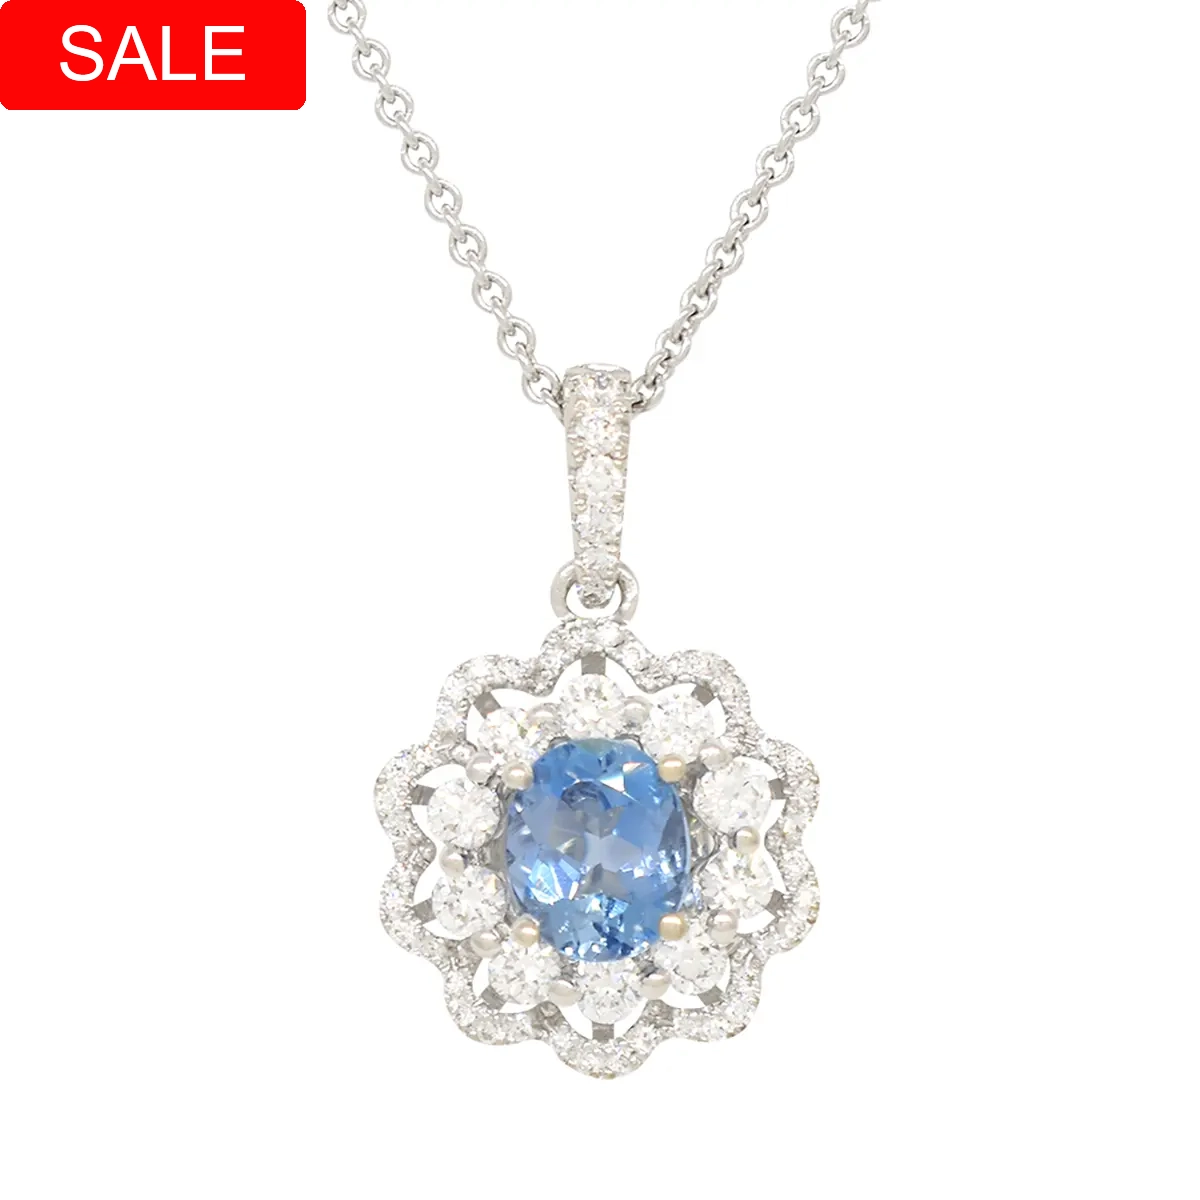 Aquamarine and diamond pendant necklace in white gold with 0.54 Ct. blue aquamarine and 0.41 Ct. t.w. in 56 round cut genuine diamonds